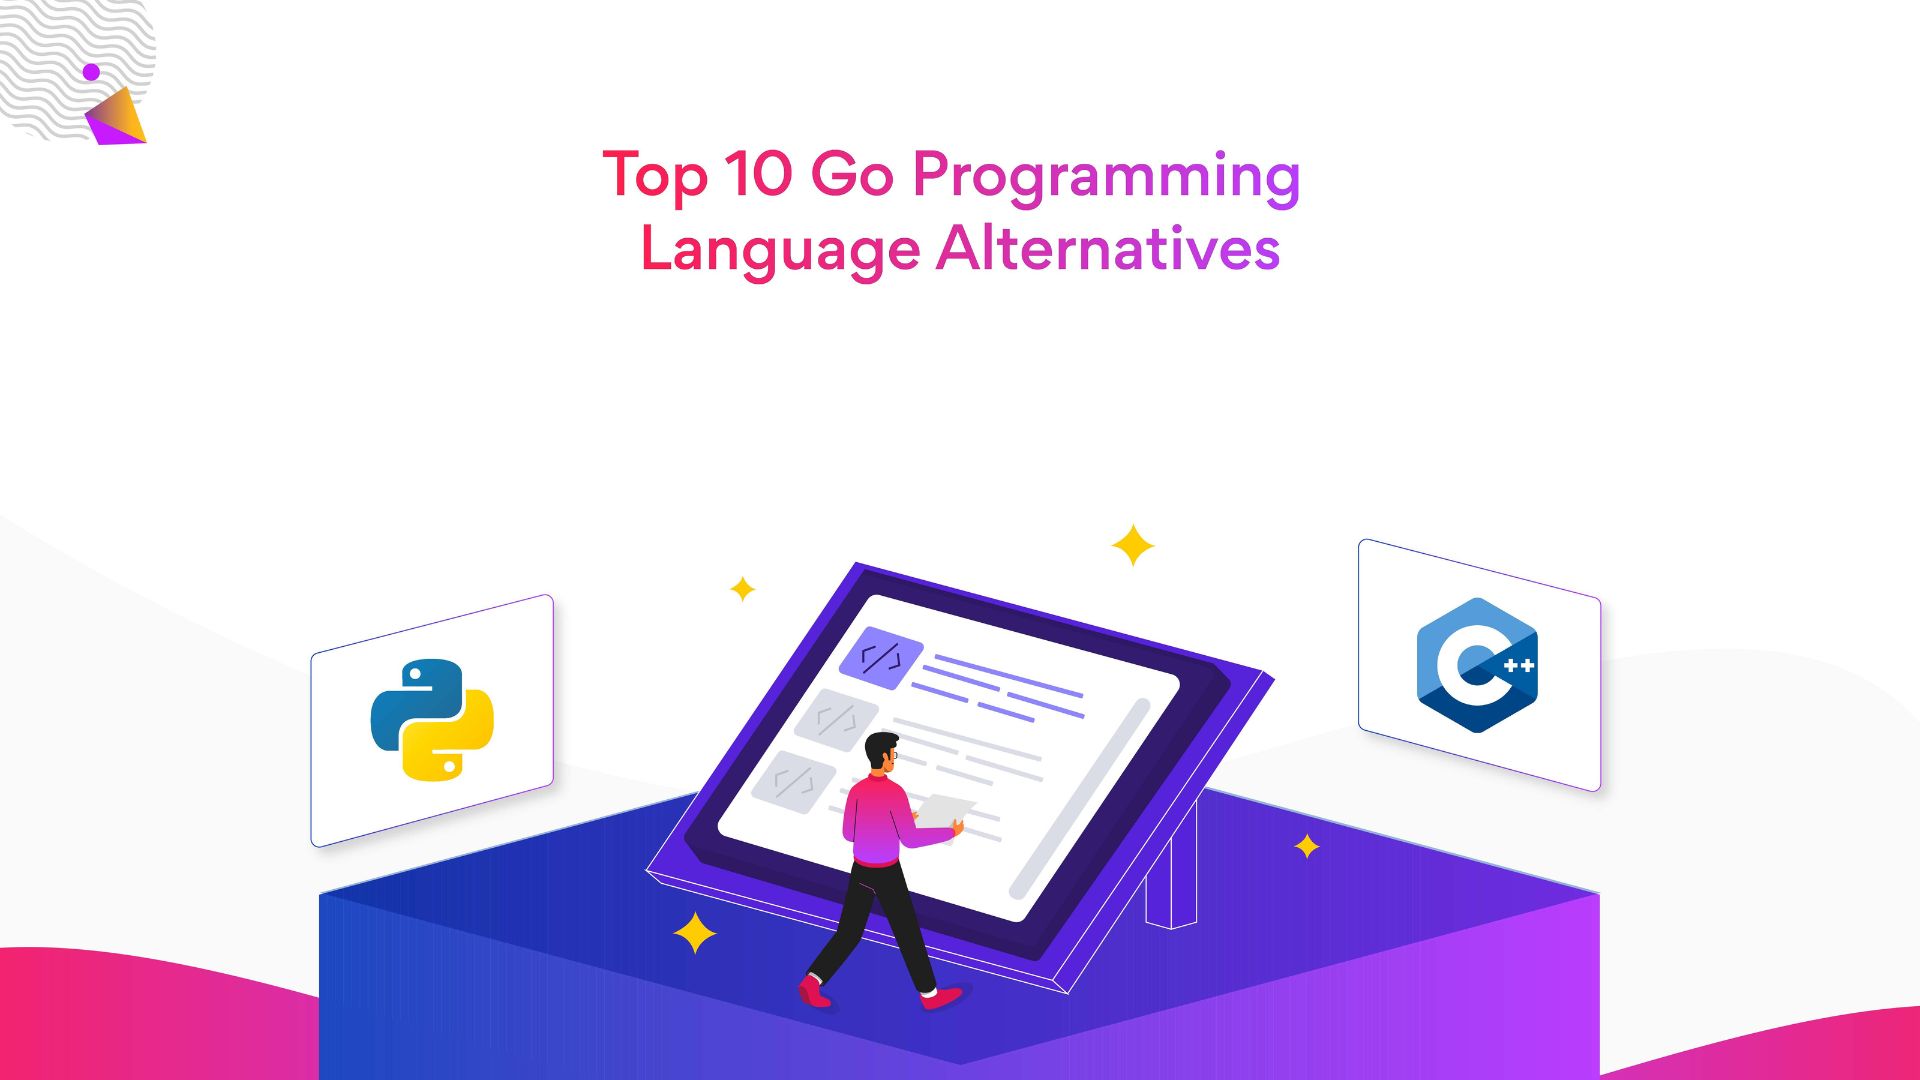 Top 10 Go Programming language alternatives